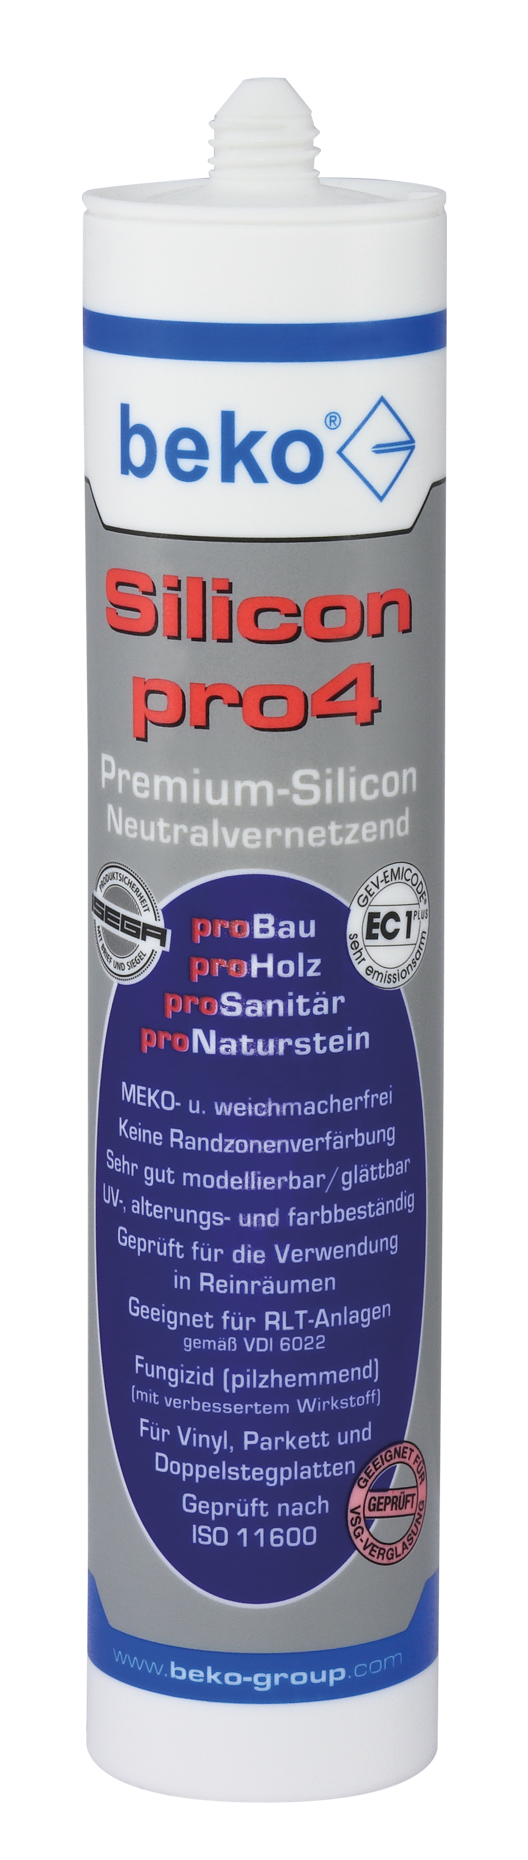 Beko Silicon pro4 Premium 310 ml transparent